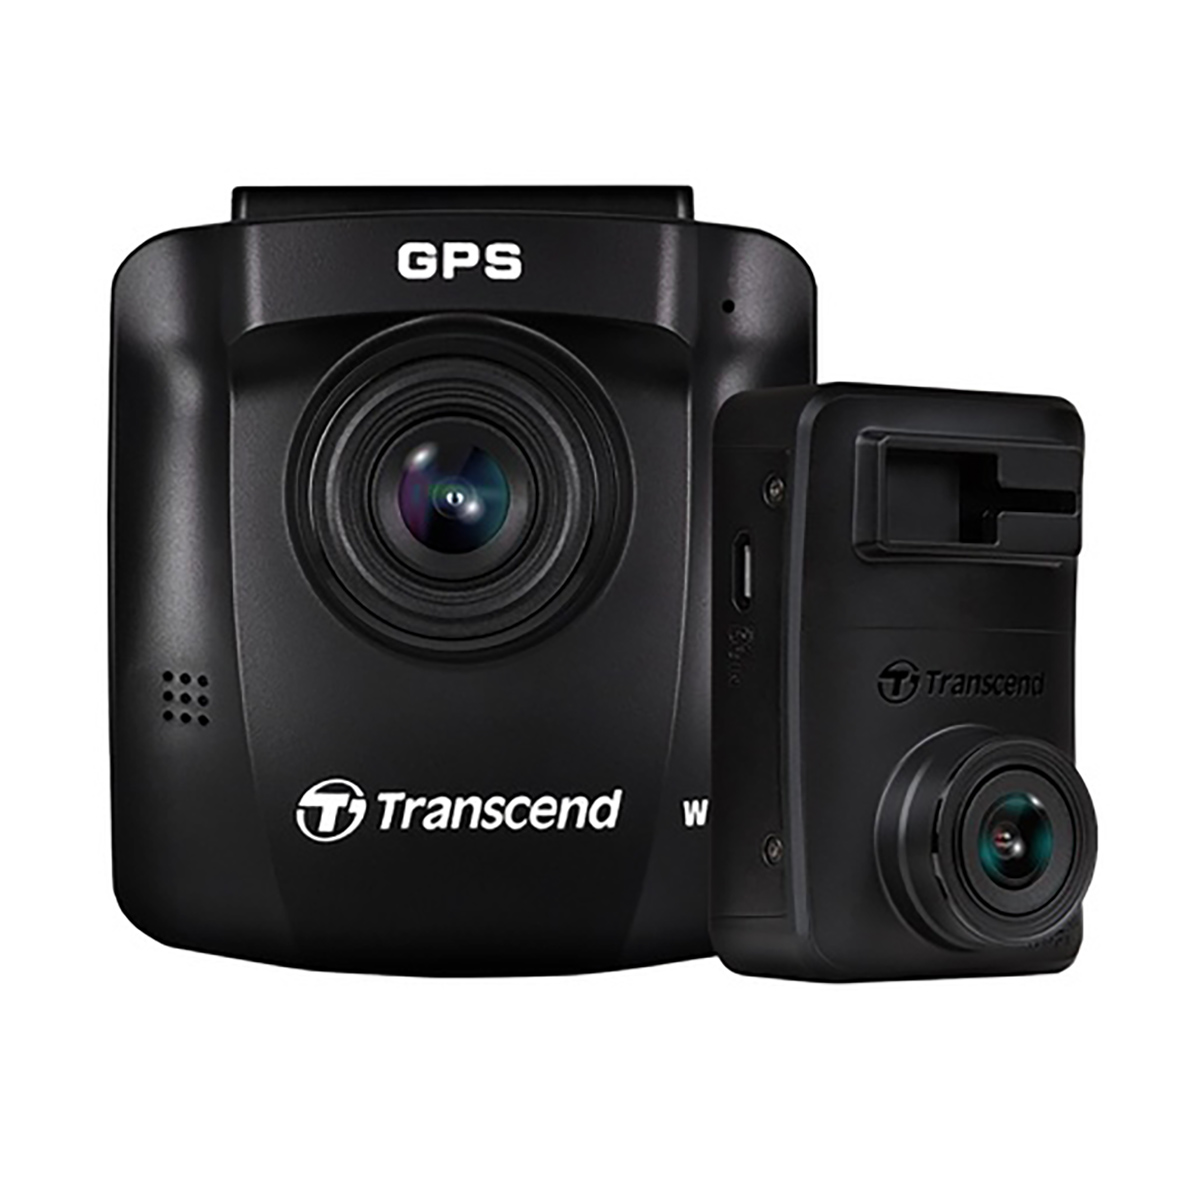 Transcend Drive Pro 620 Dual Dashcam